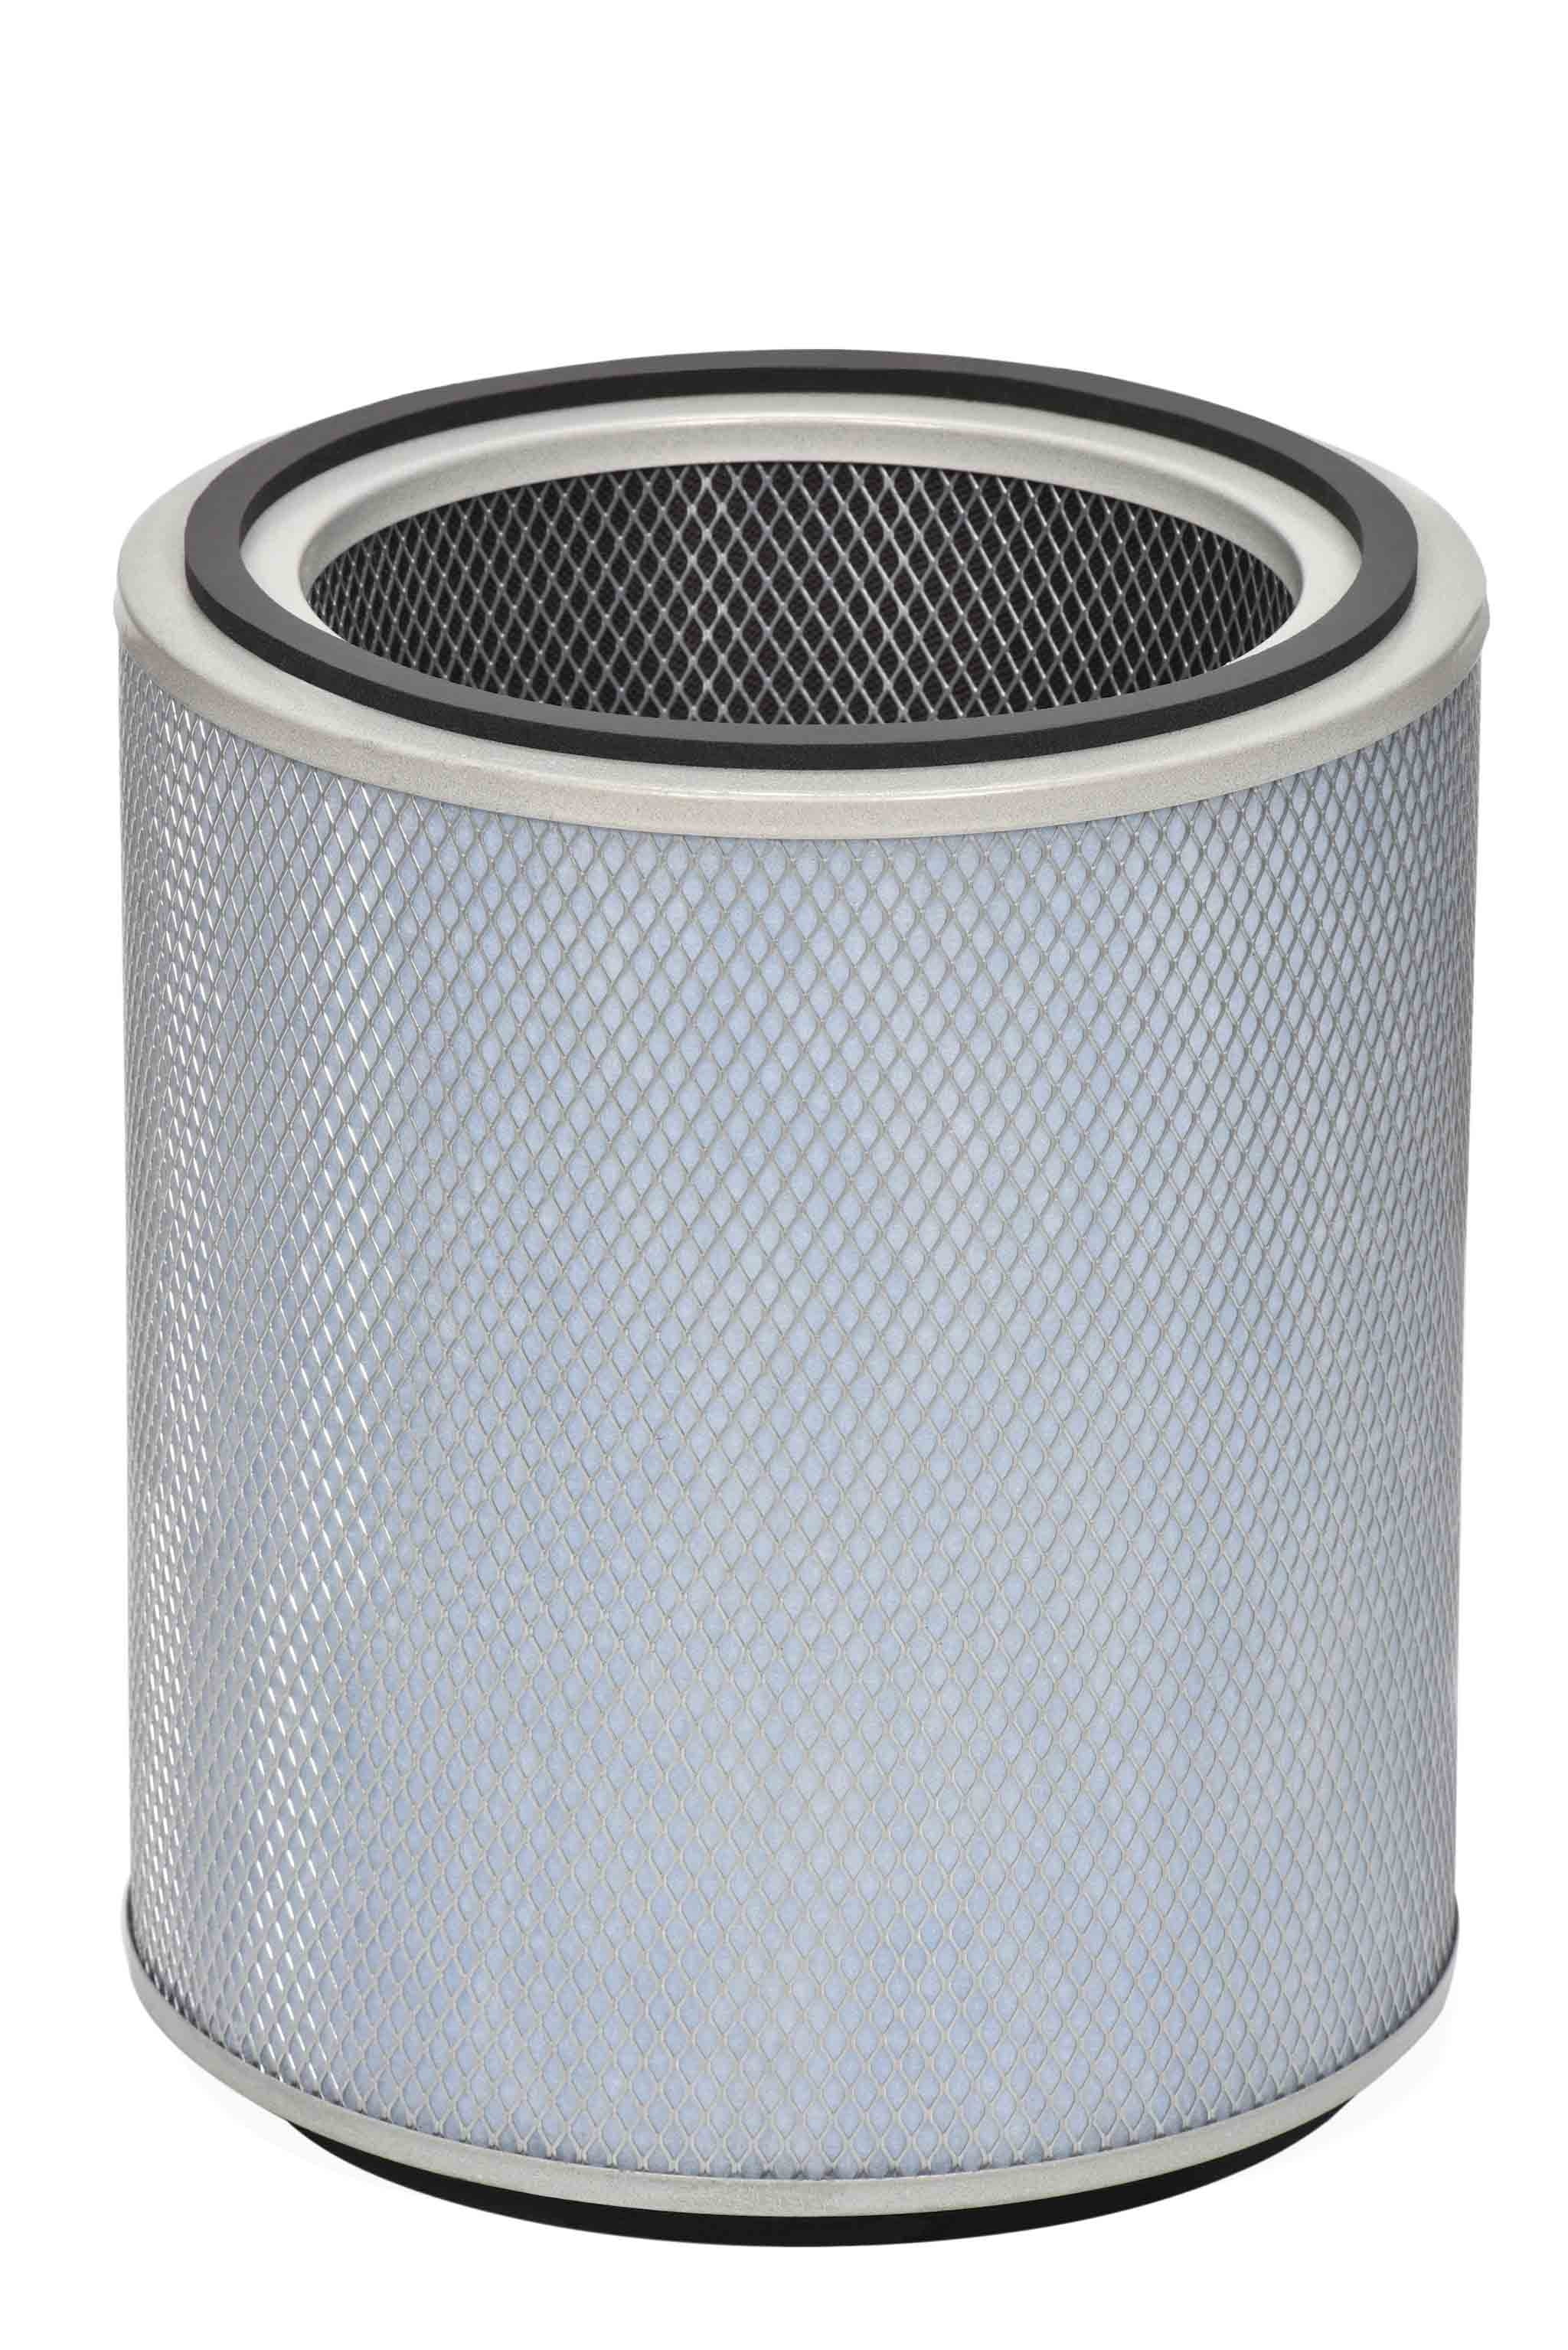 10 Feet of Blue and White Air Filter Media Roll , MERV6 Polyester